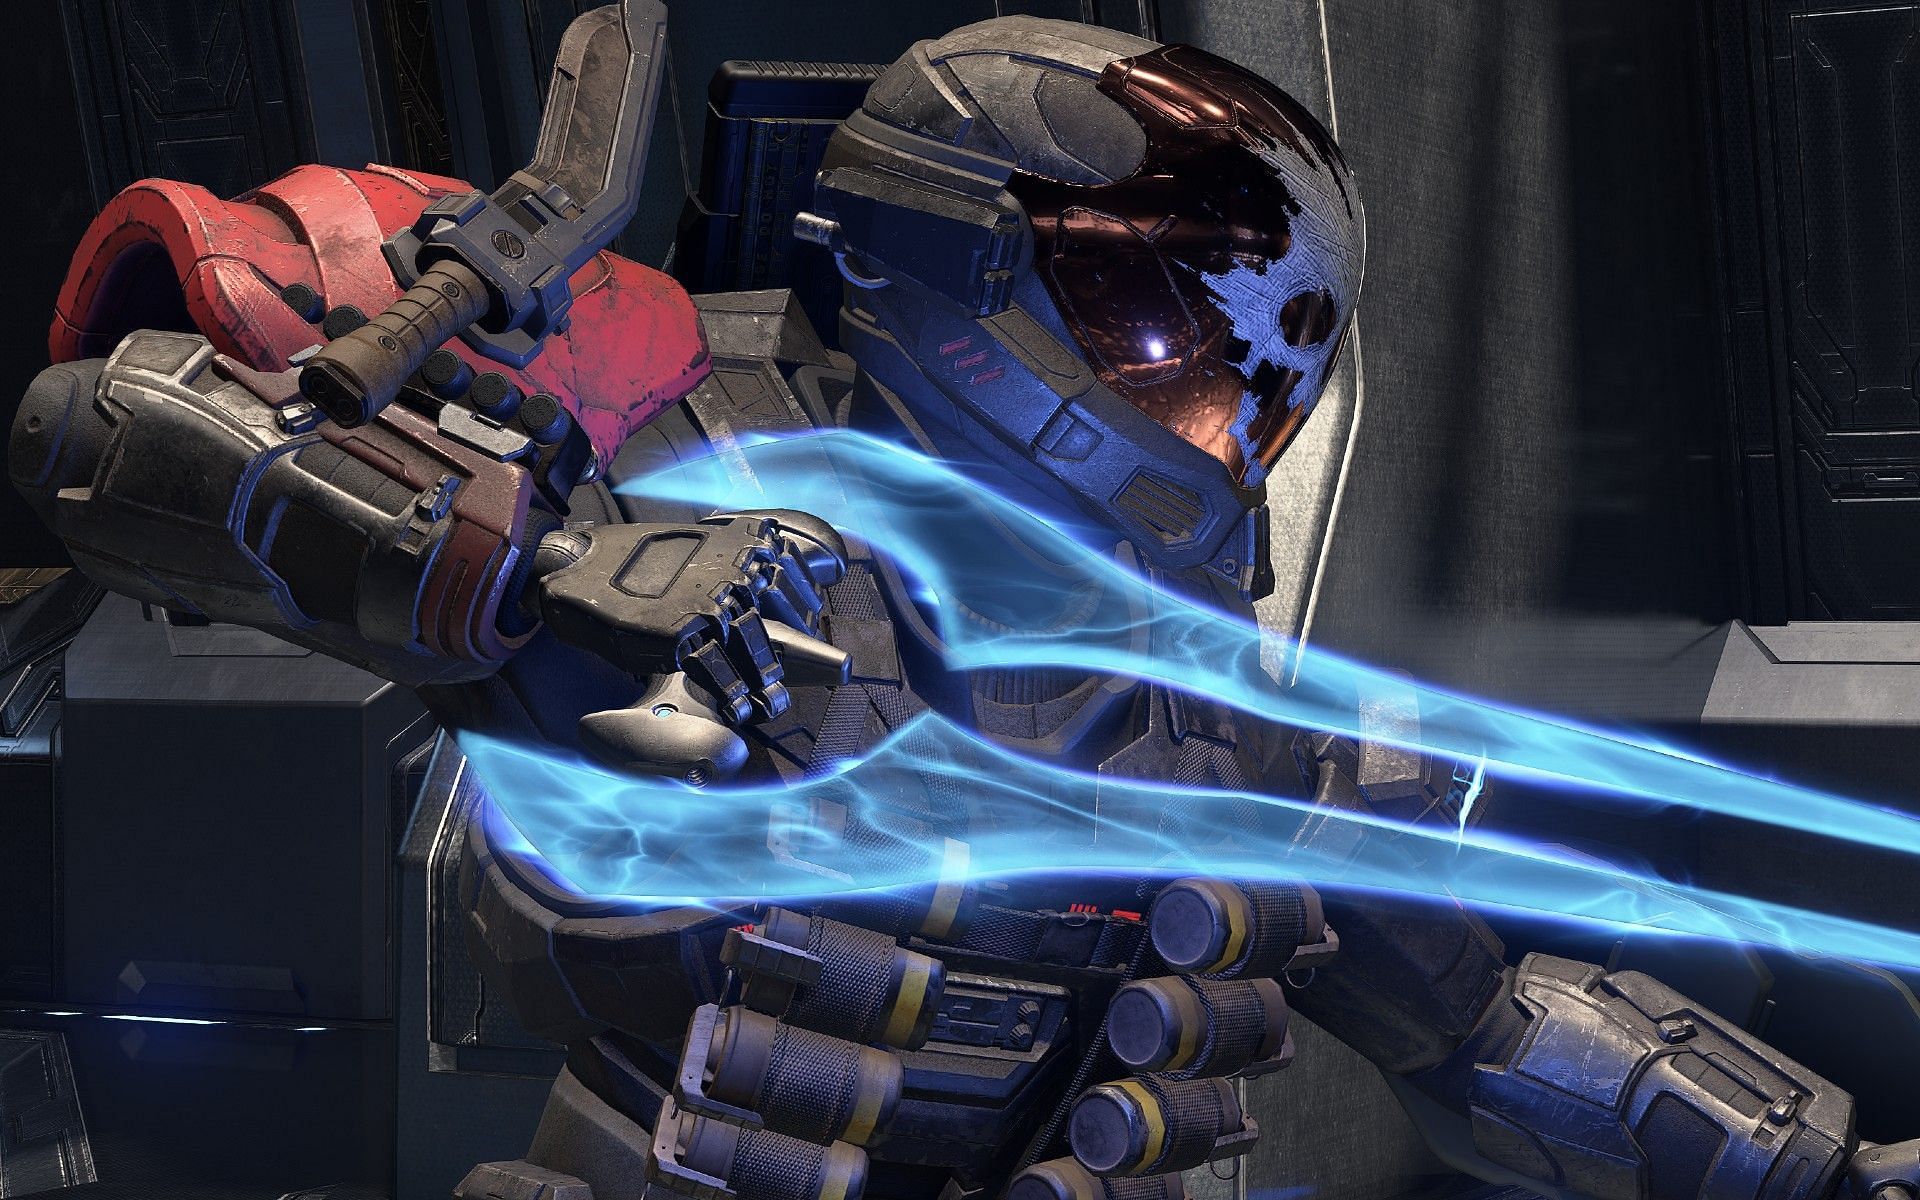 Purchase Razer products for Halo Infinite rewards. (Image via Xbox)